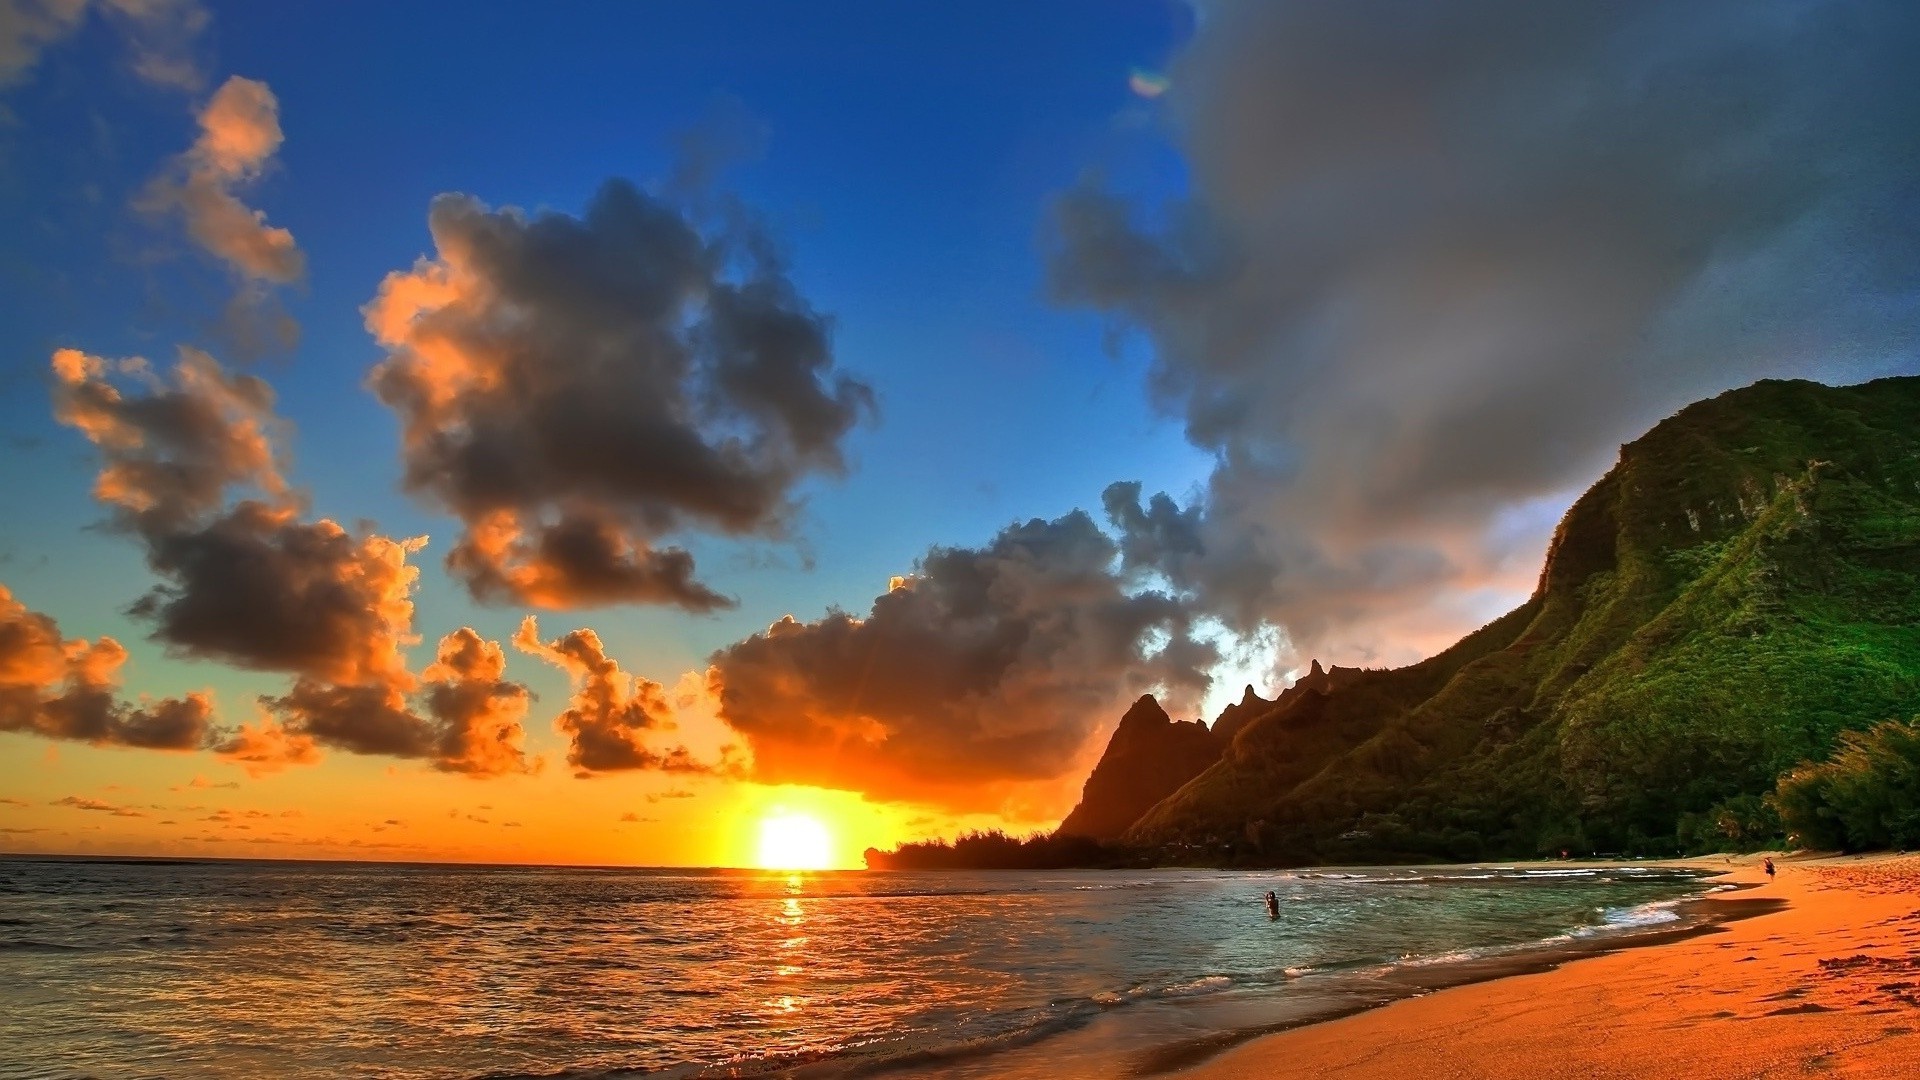 HD Sunset Beaches Backgrounds 